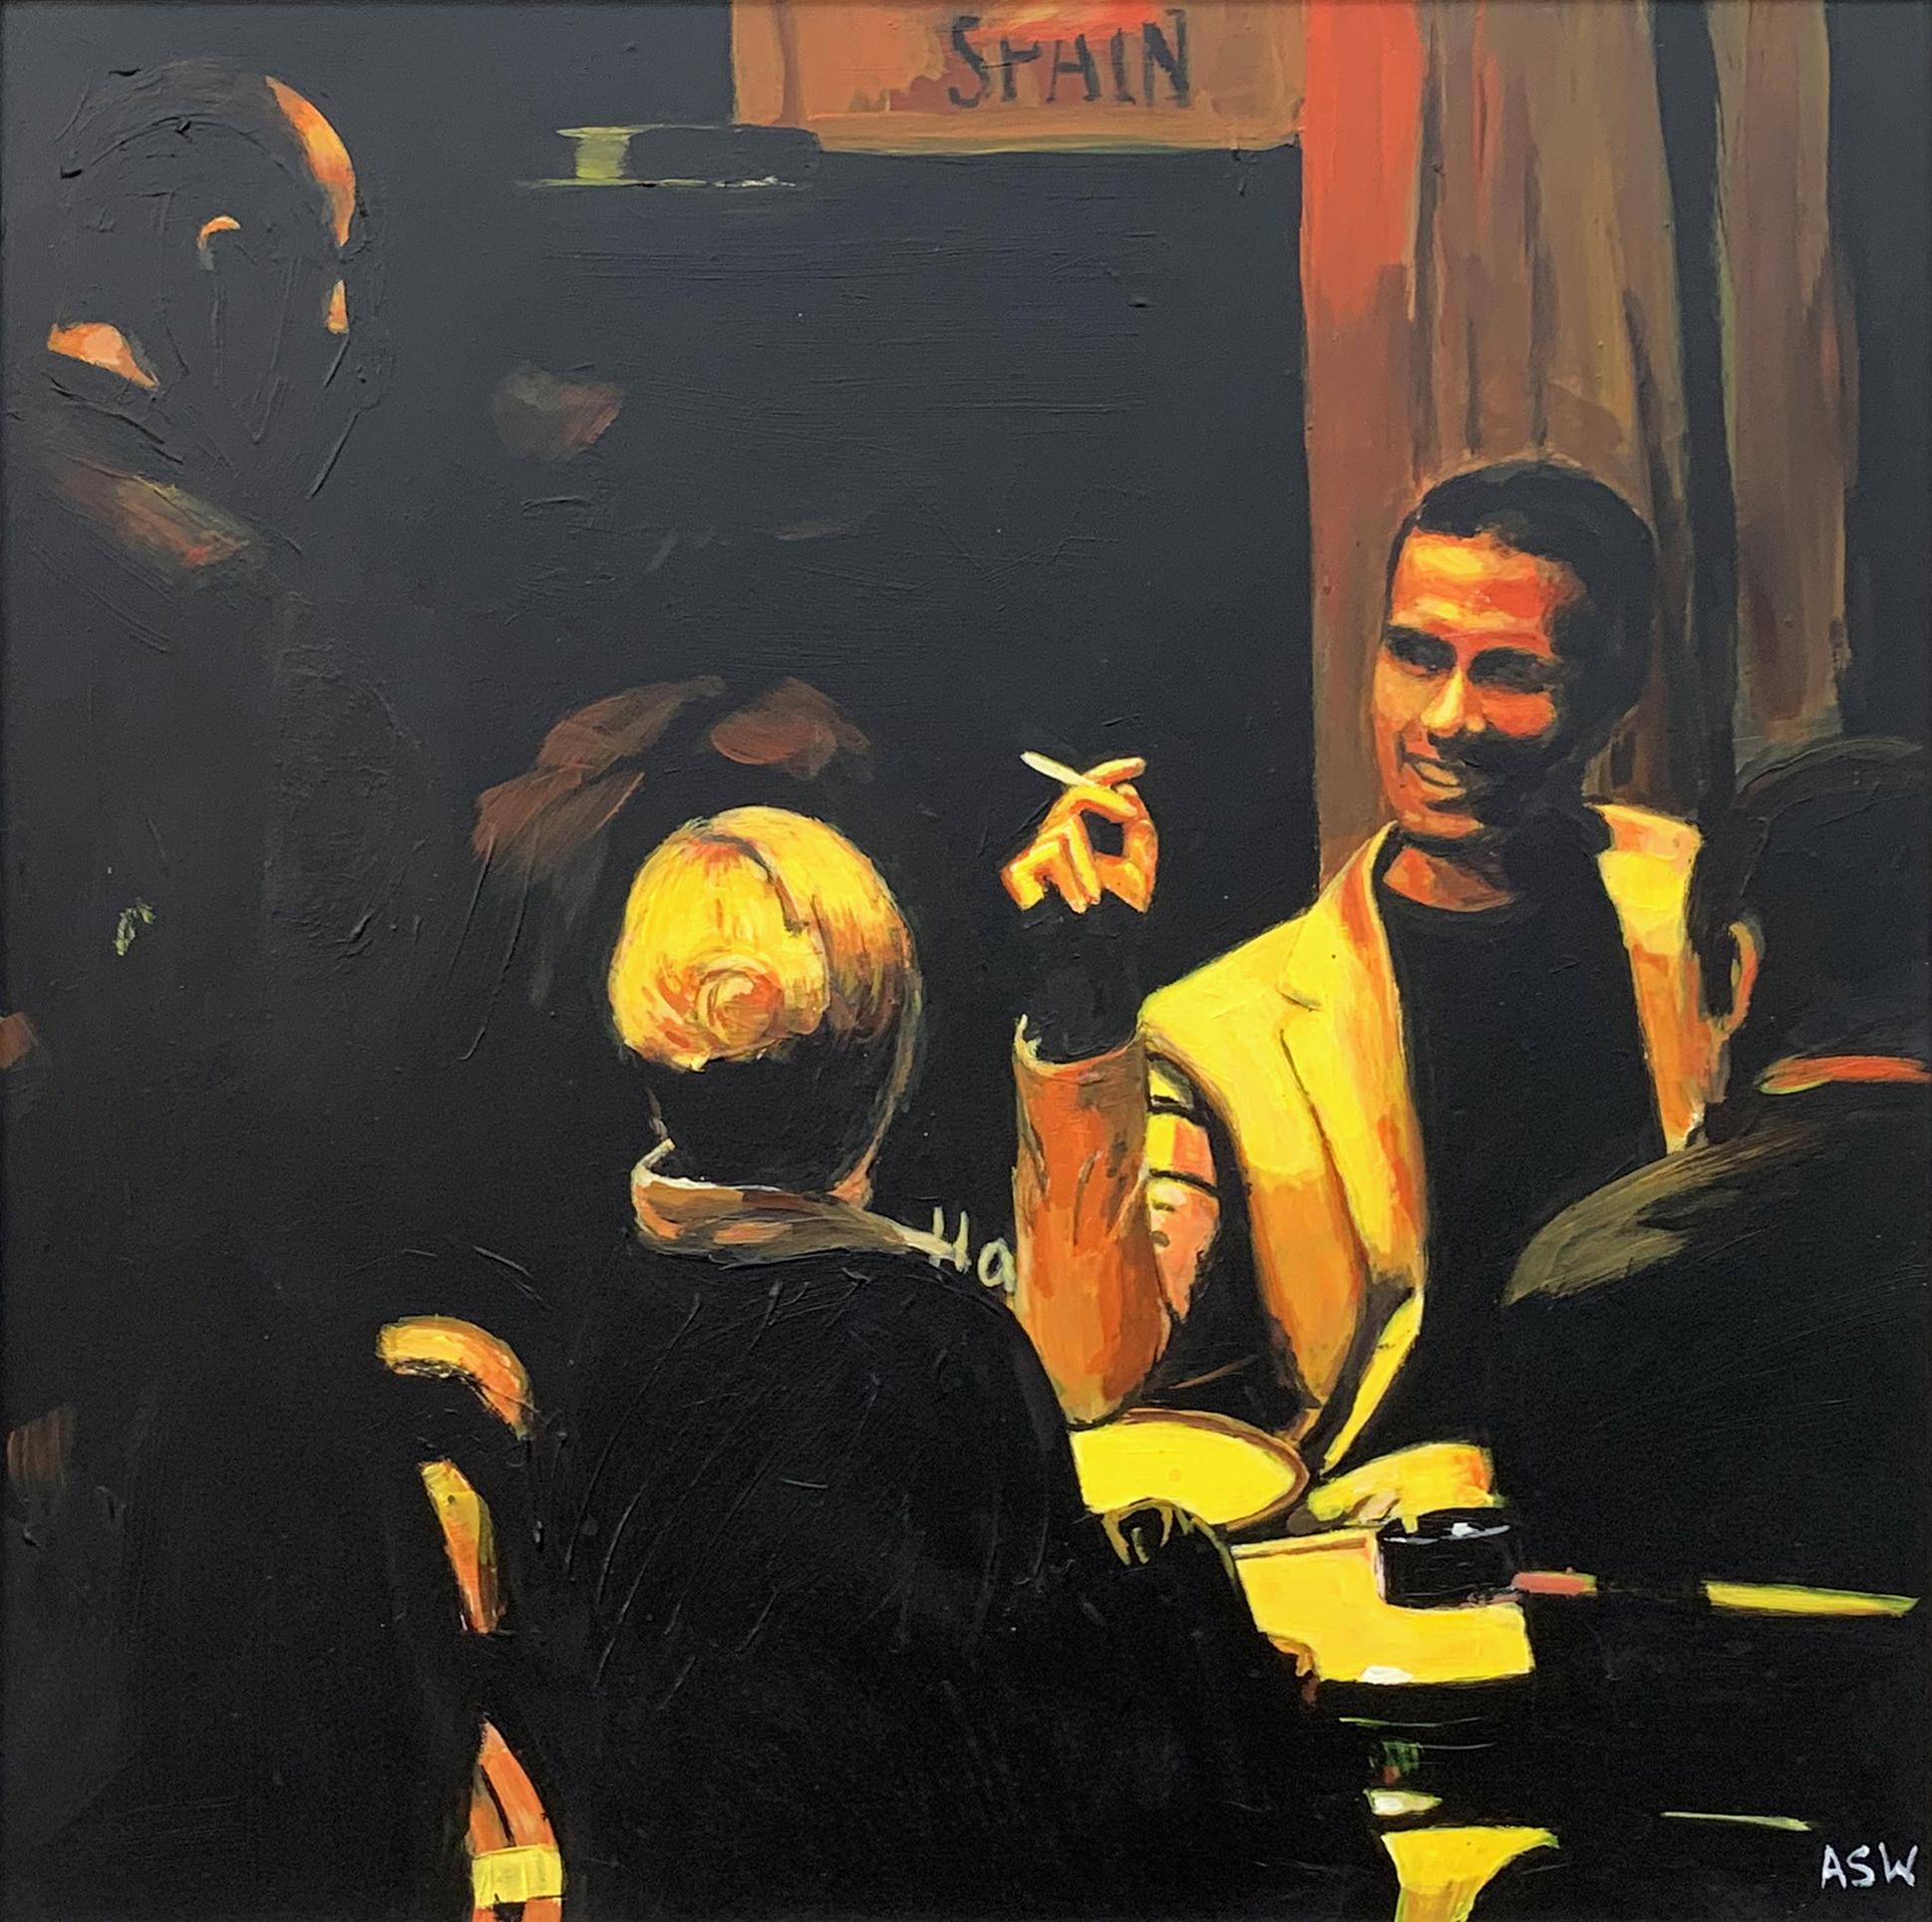 Original Painting of Spanish Tapas Bar Interior Scene at Night by British Artist - Black Figurative Painting by Angela Wakefield